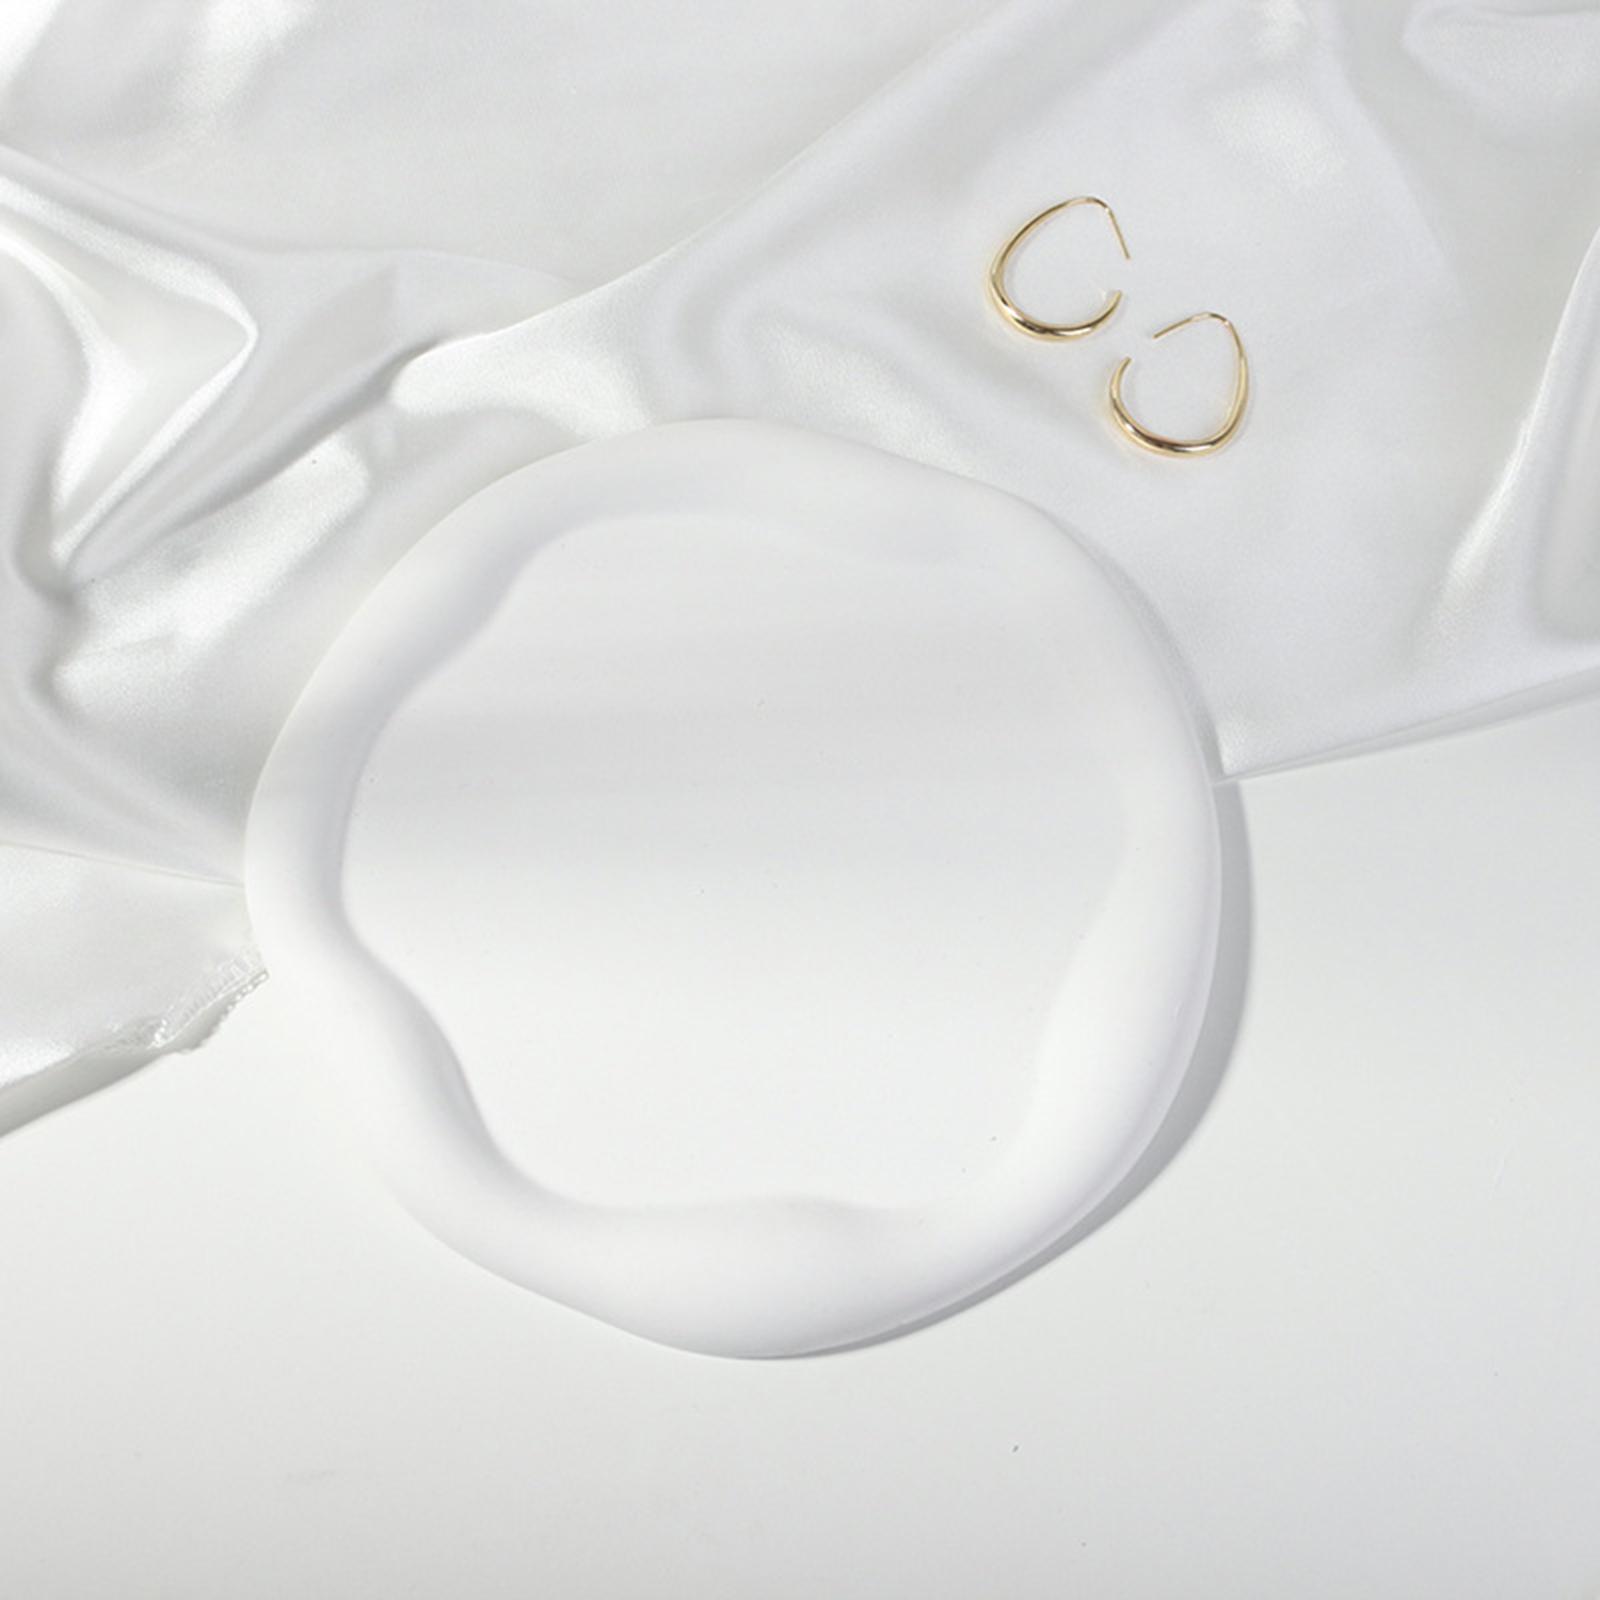 Decorative Jewelry Trays Display Plate Makeup Toiletries Plaster Vanity Tray Style C 18.5cm